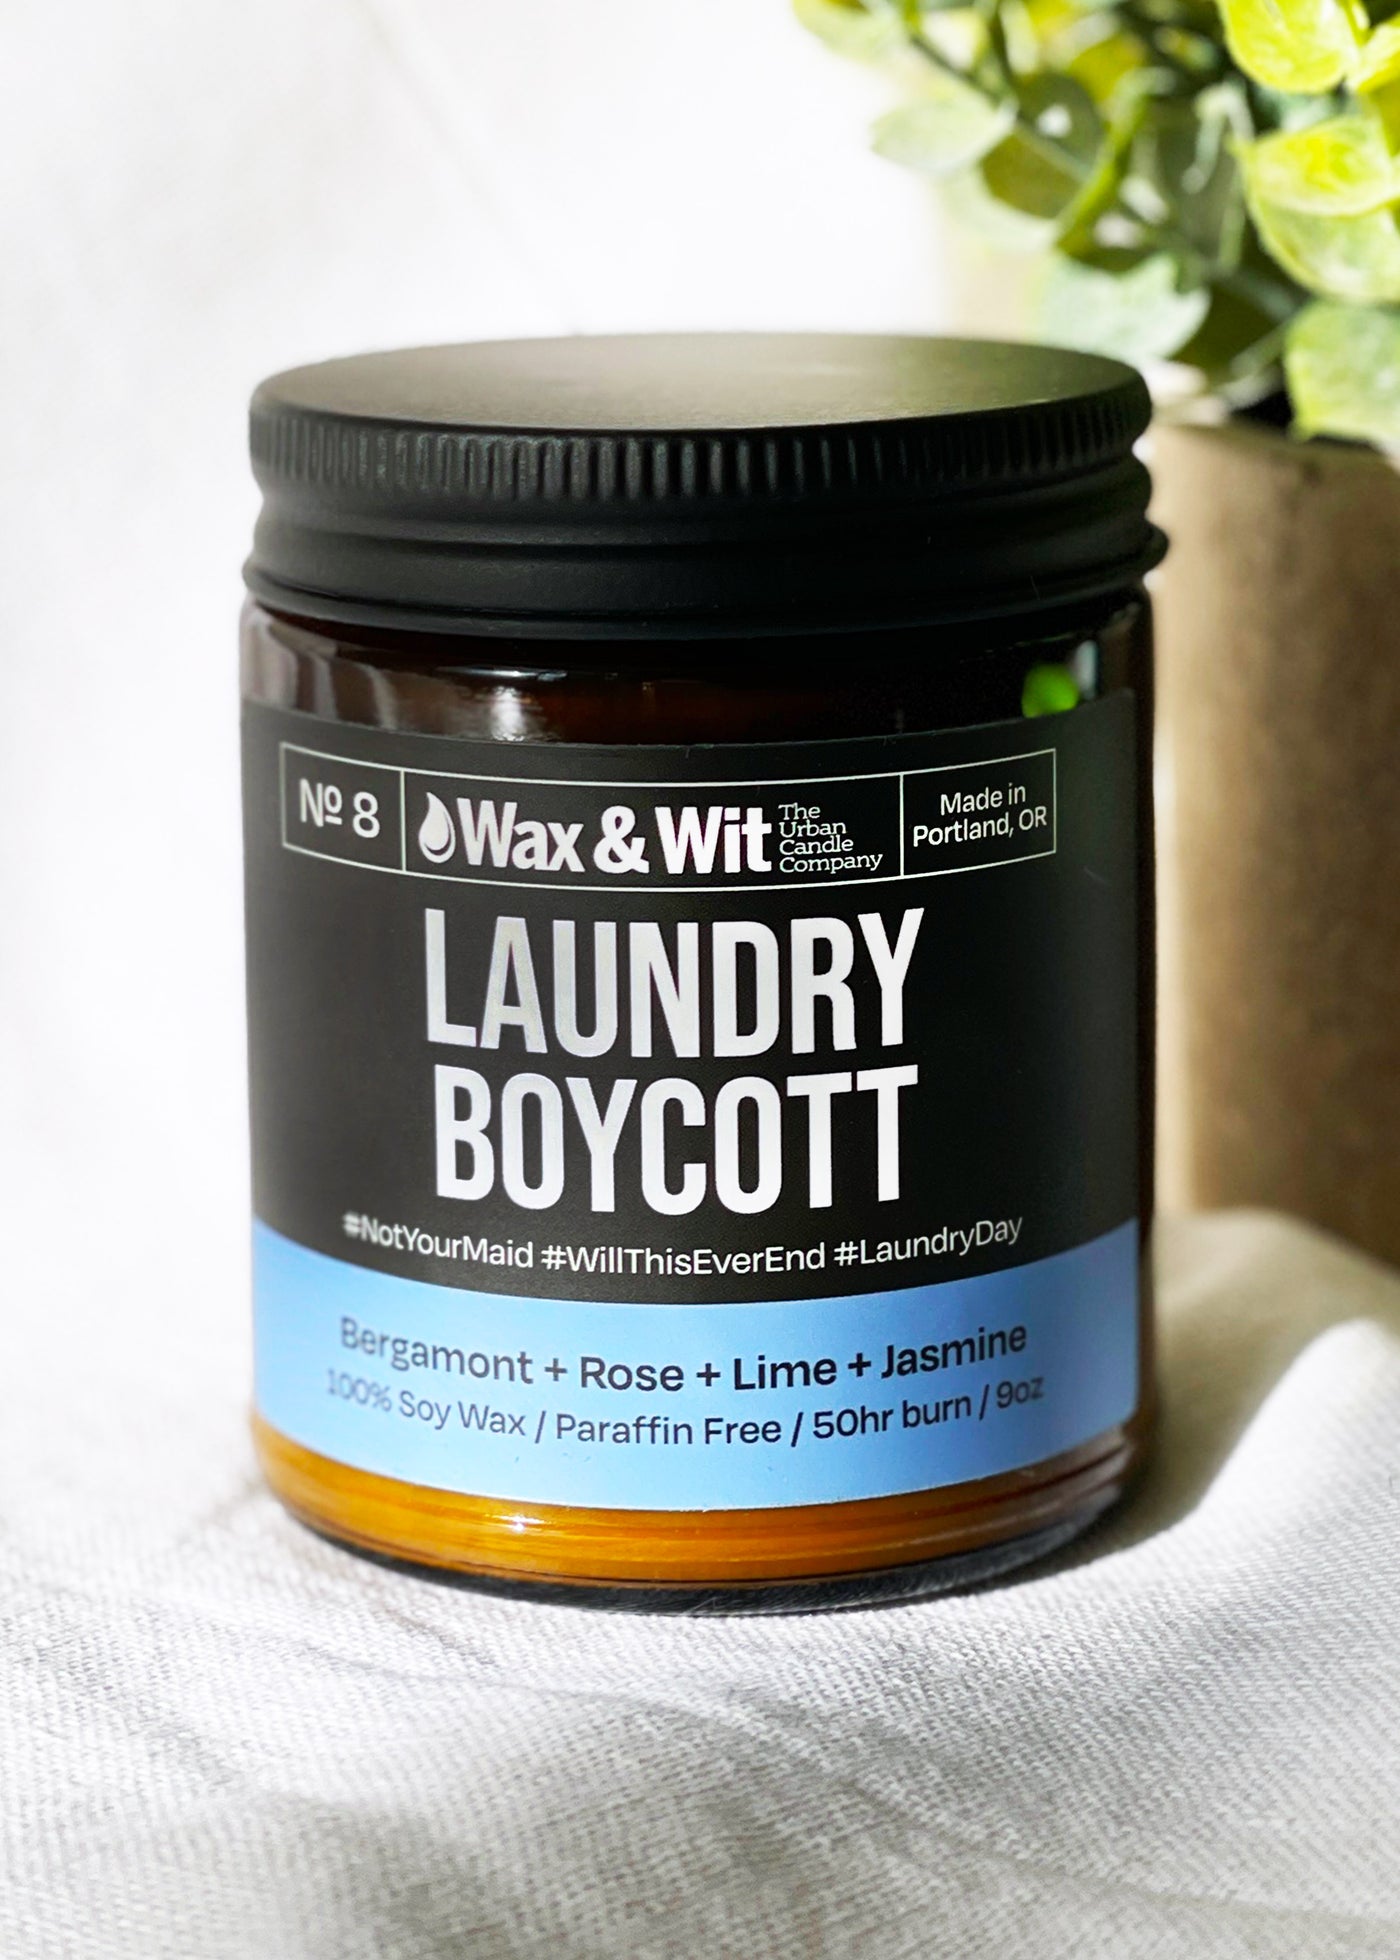 Laundry Boycott